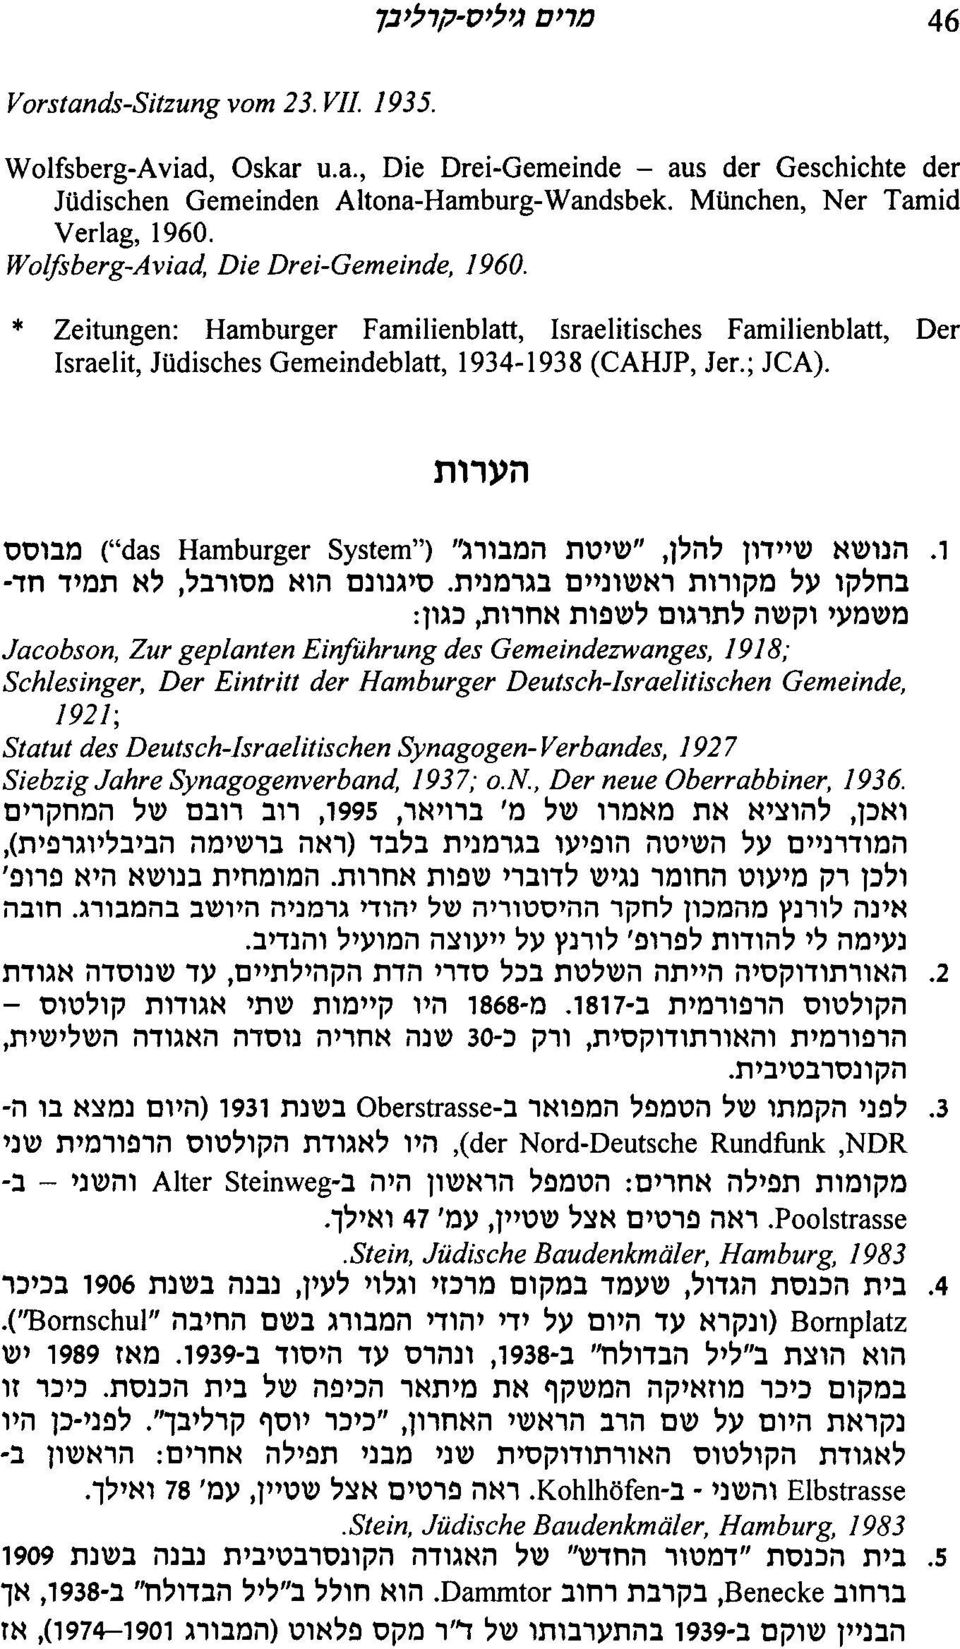 * Zeitungen: Hamburger Familienblatt, Israelitisches Familienblatt, Der Israelit, Judisches Gemeindeblatt, 1934-1938 (CAHJP, Jer.; JCA).